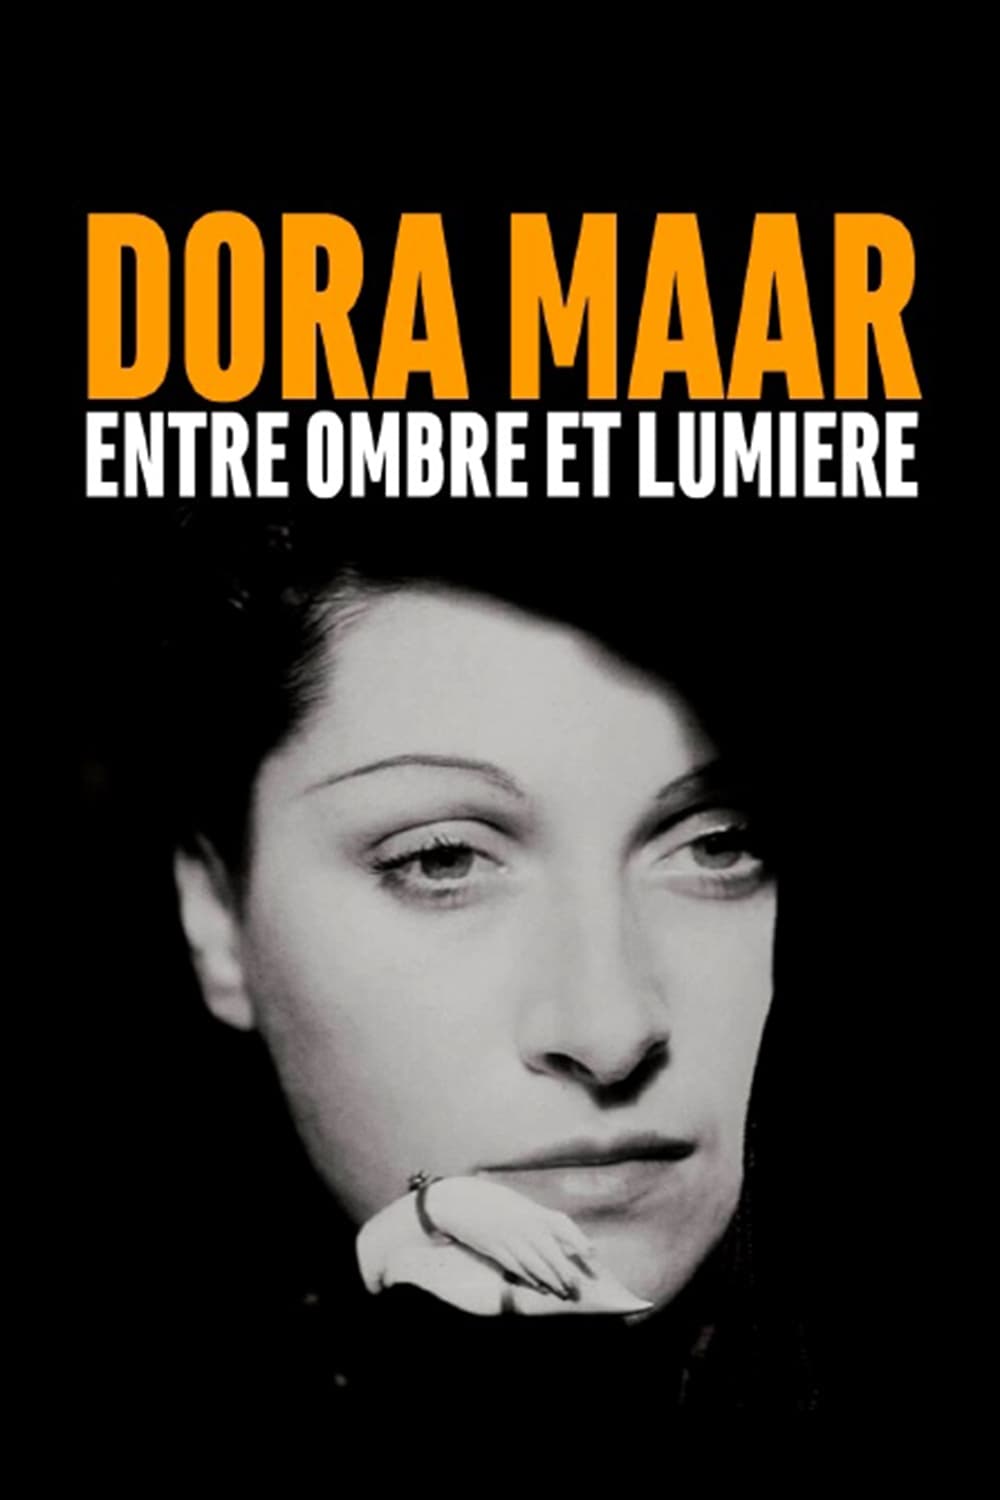 Caratula de Dora Maar, entre ombre et lumière (Dora Maar, entre luces y sombras) 